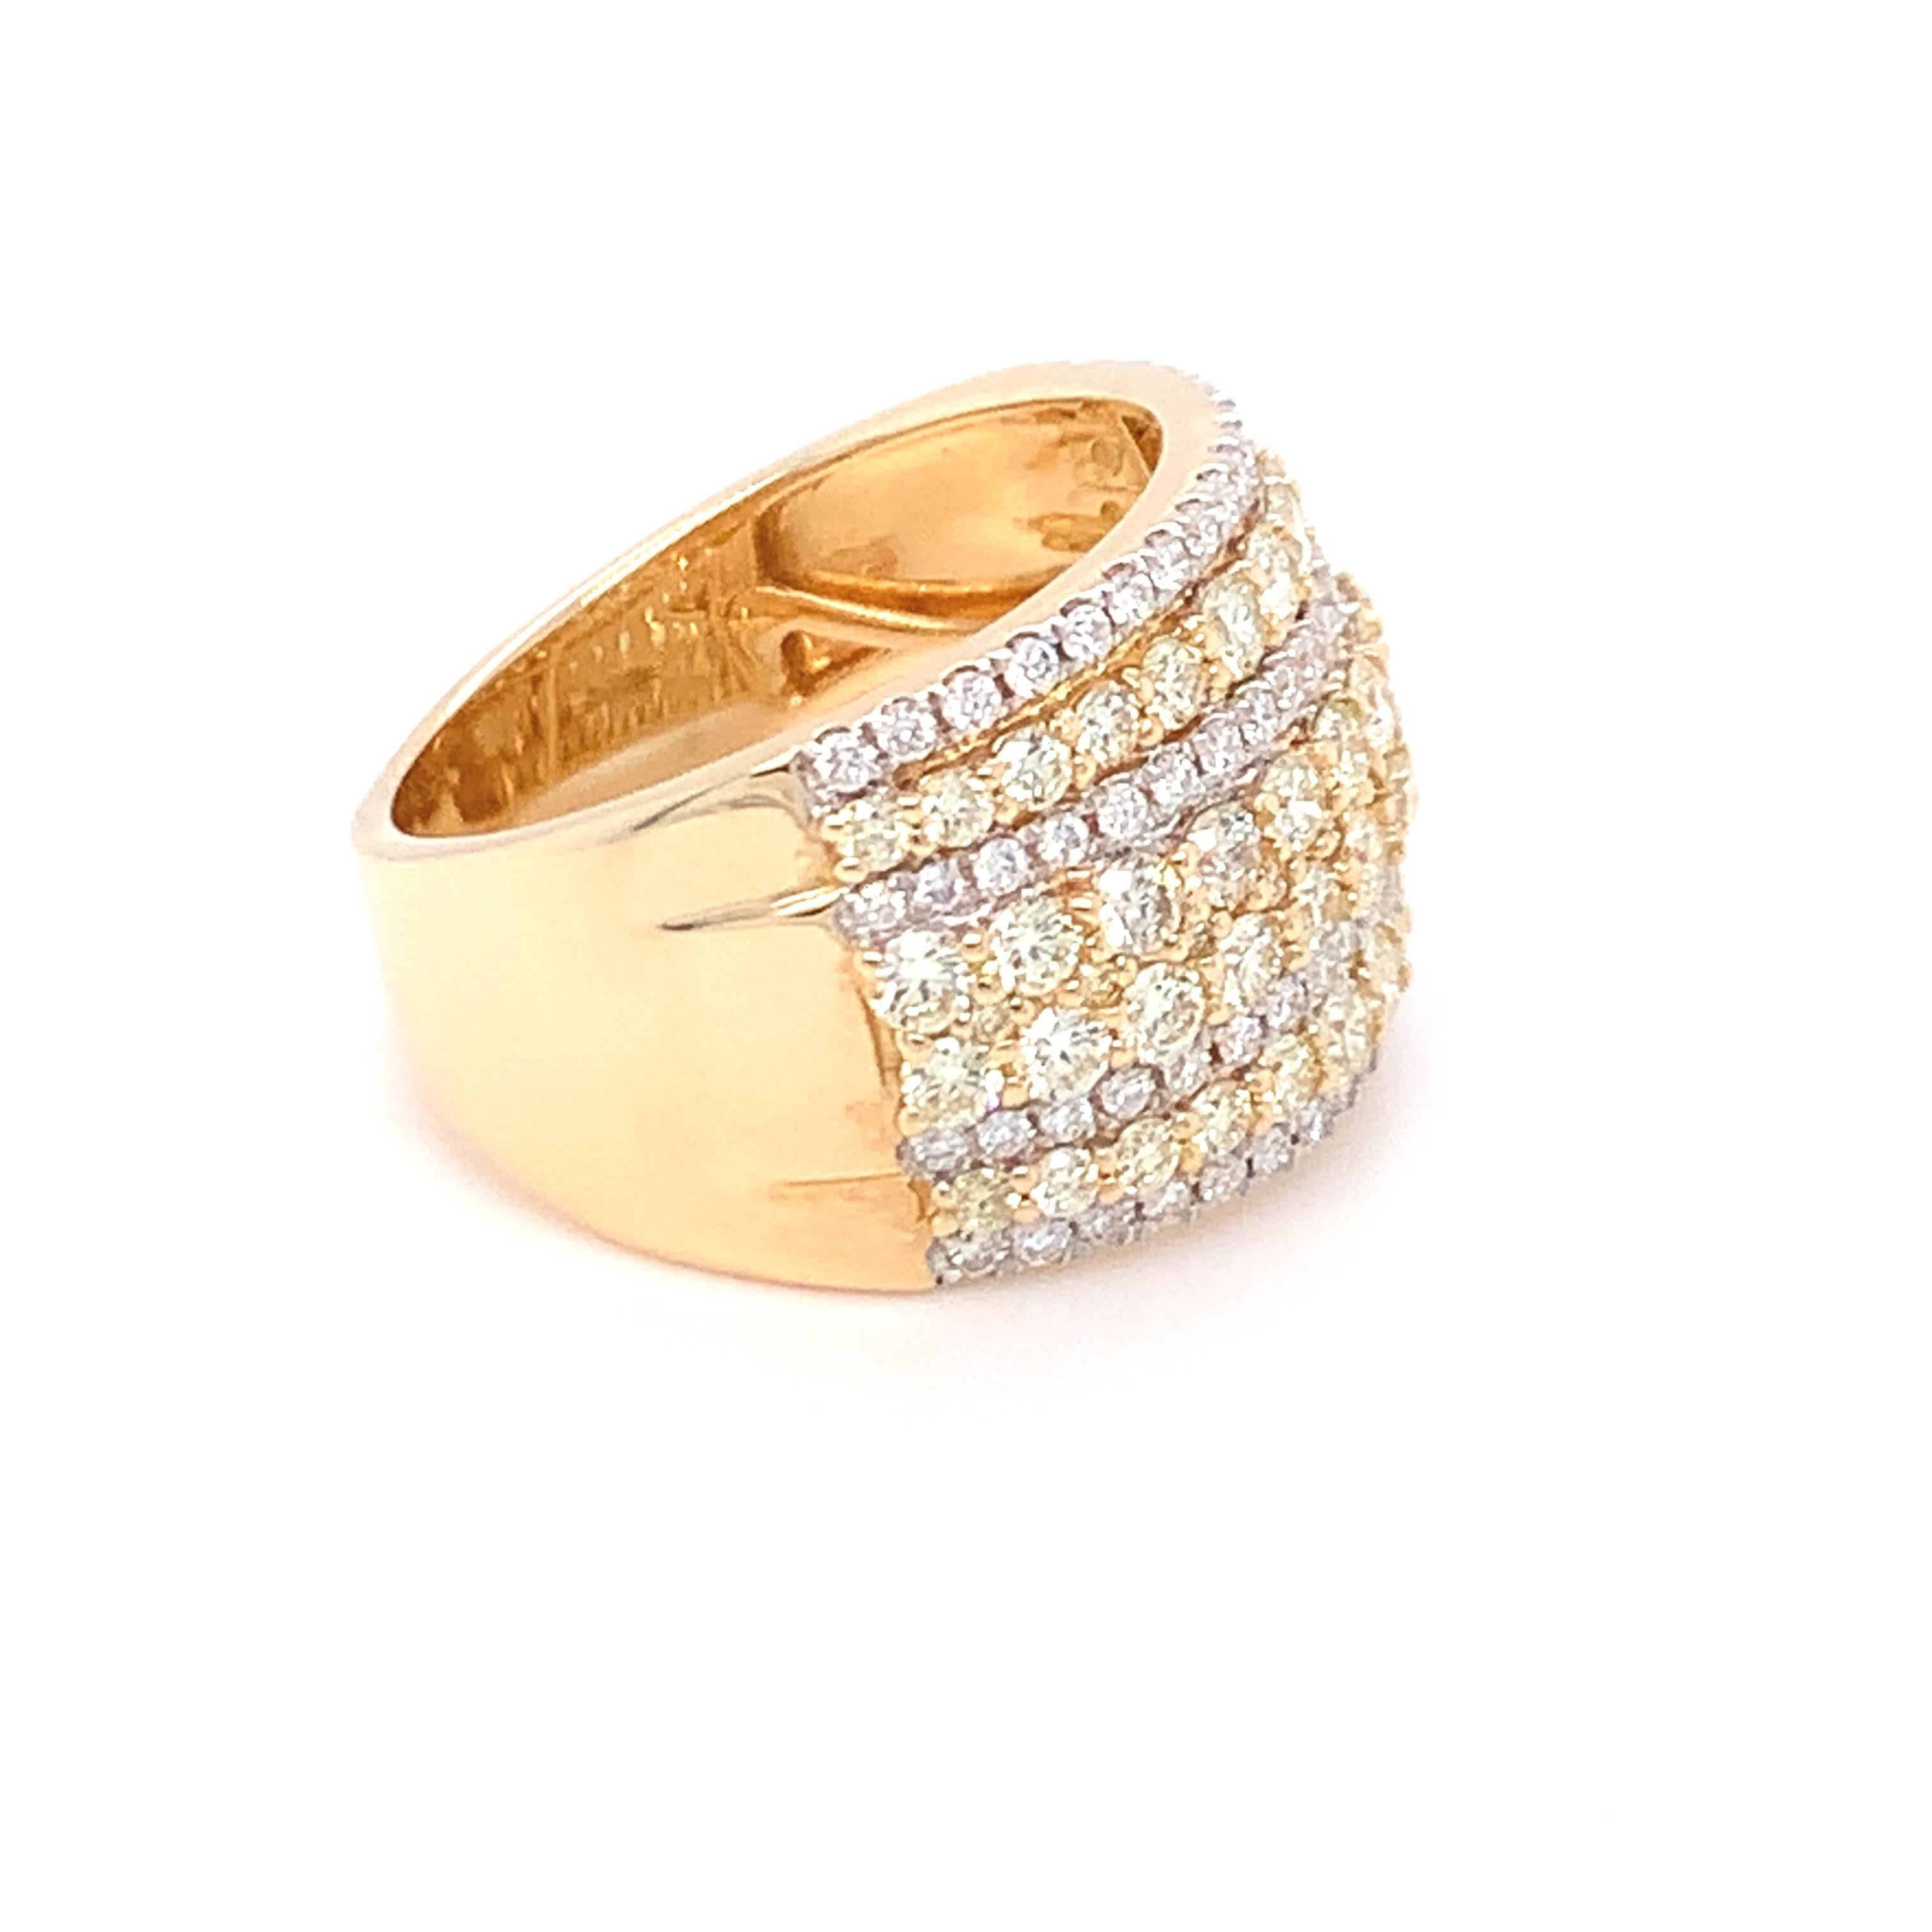 Artisan 2.08 Carat Diamond Band Ring in 14k Yellow Gold For Sale